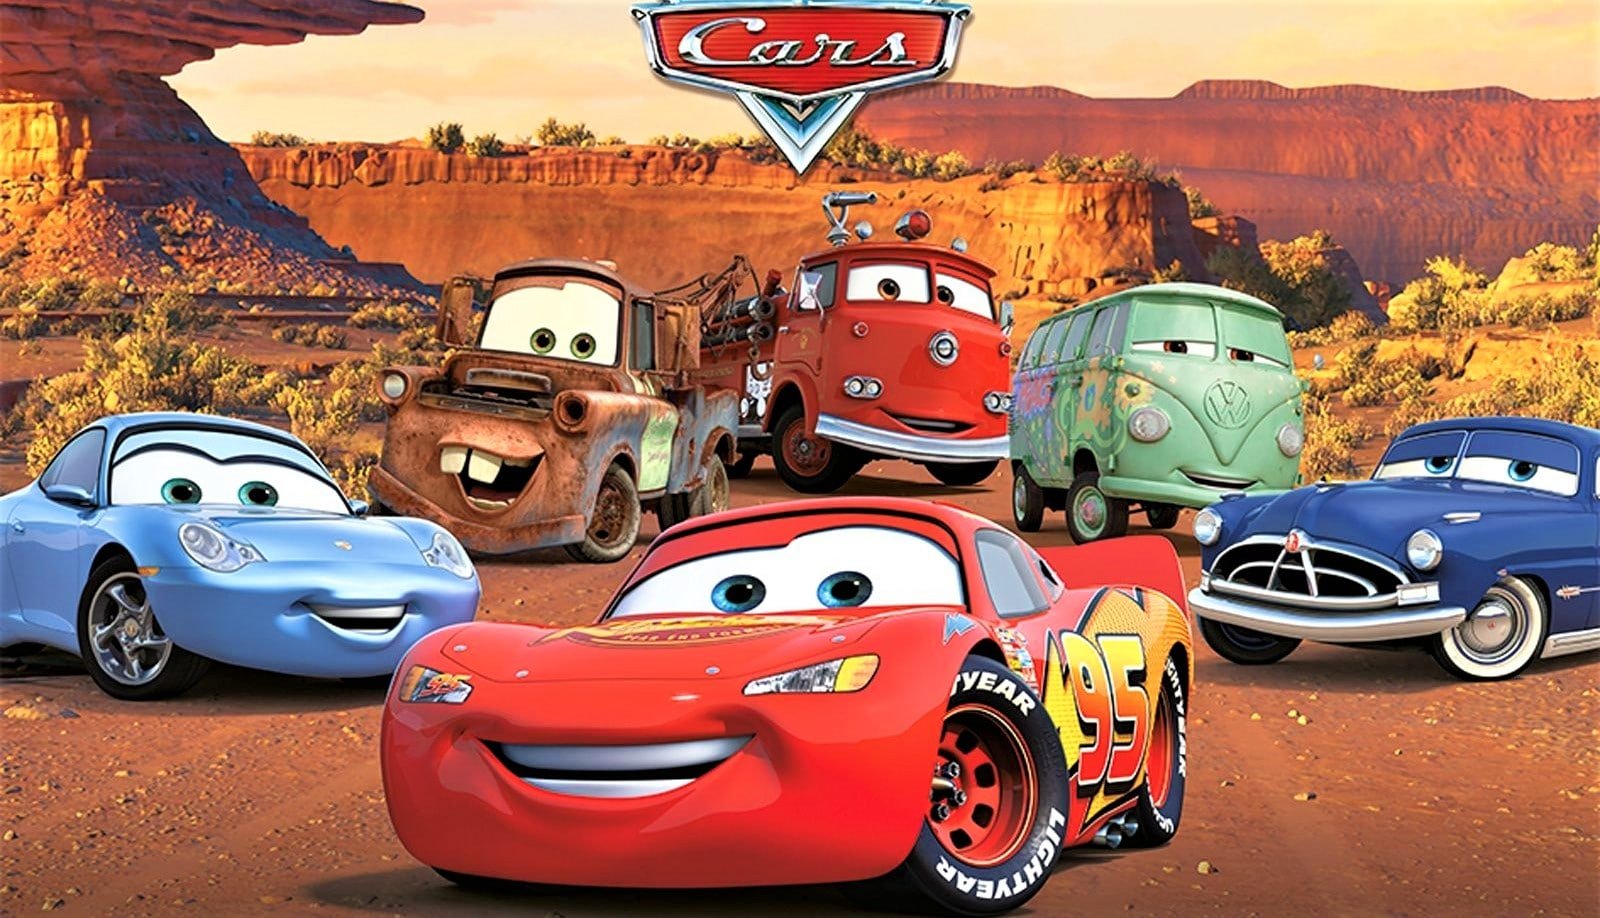 pixar's cars